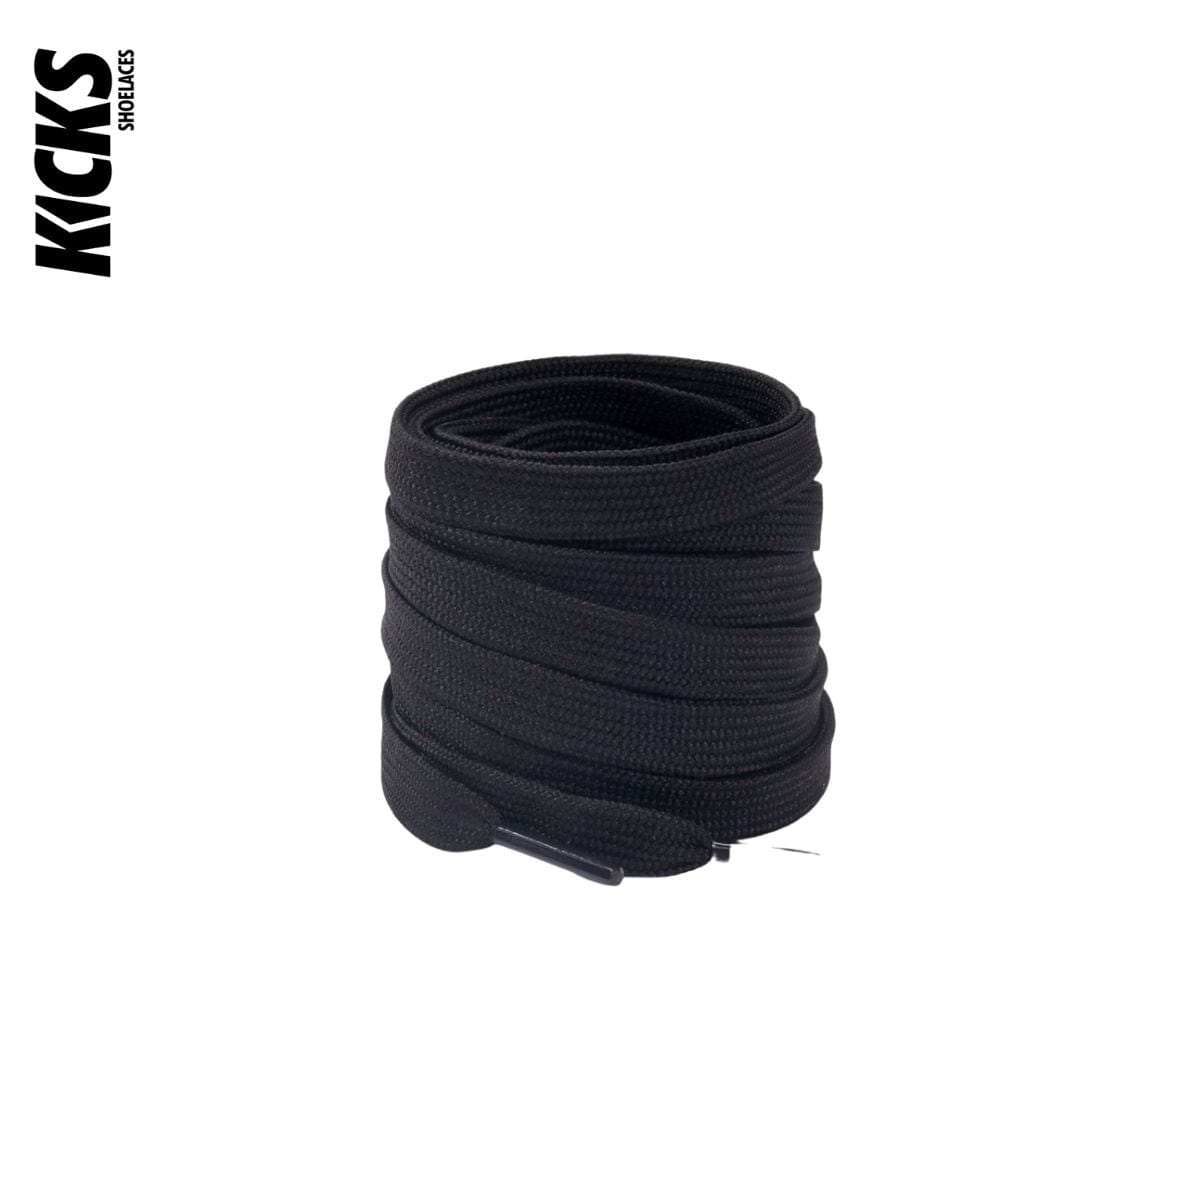 Black Nike Dunks Shoelace Replacements - Kicks Shoelaces